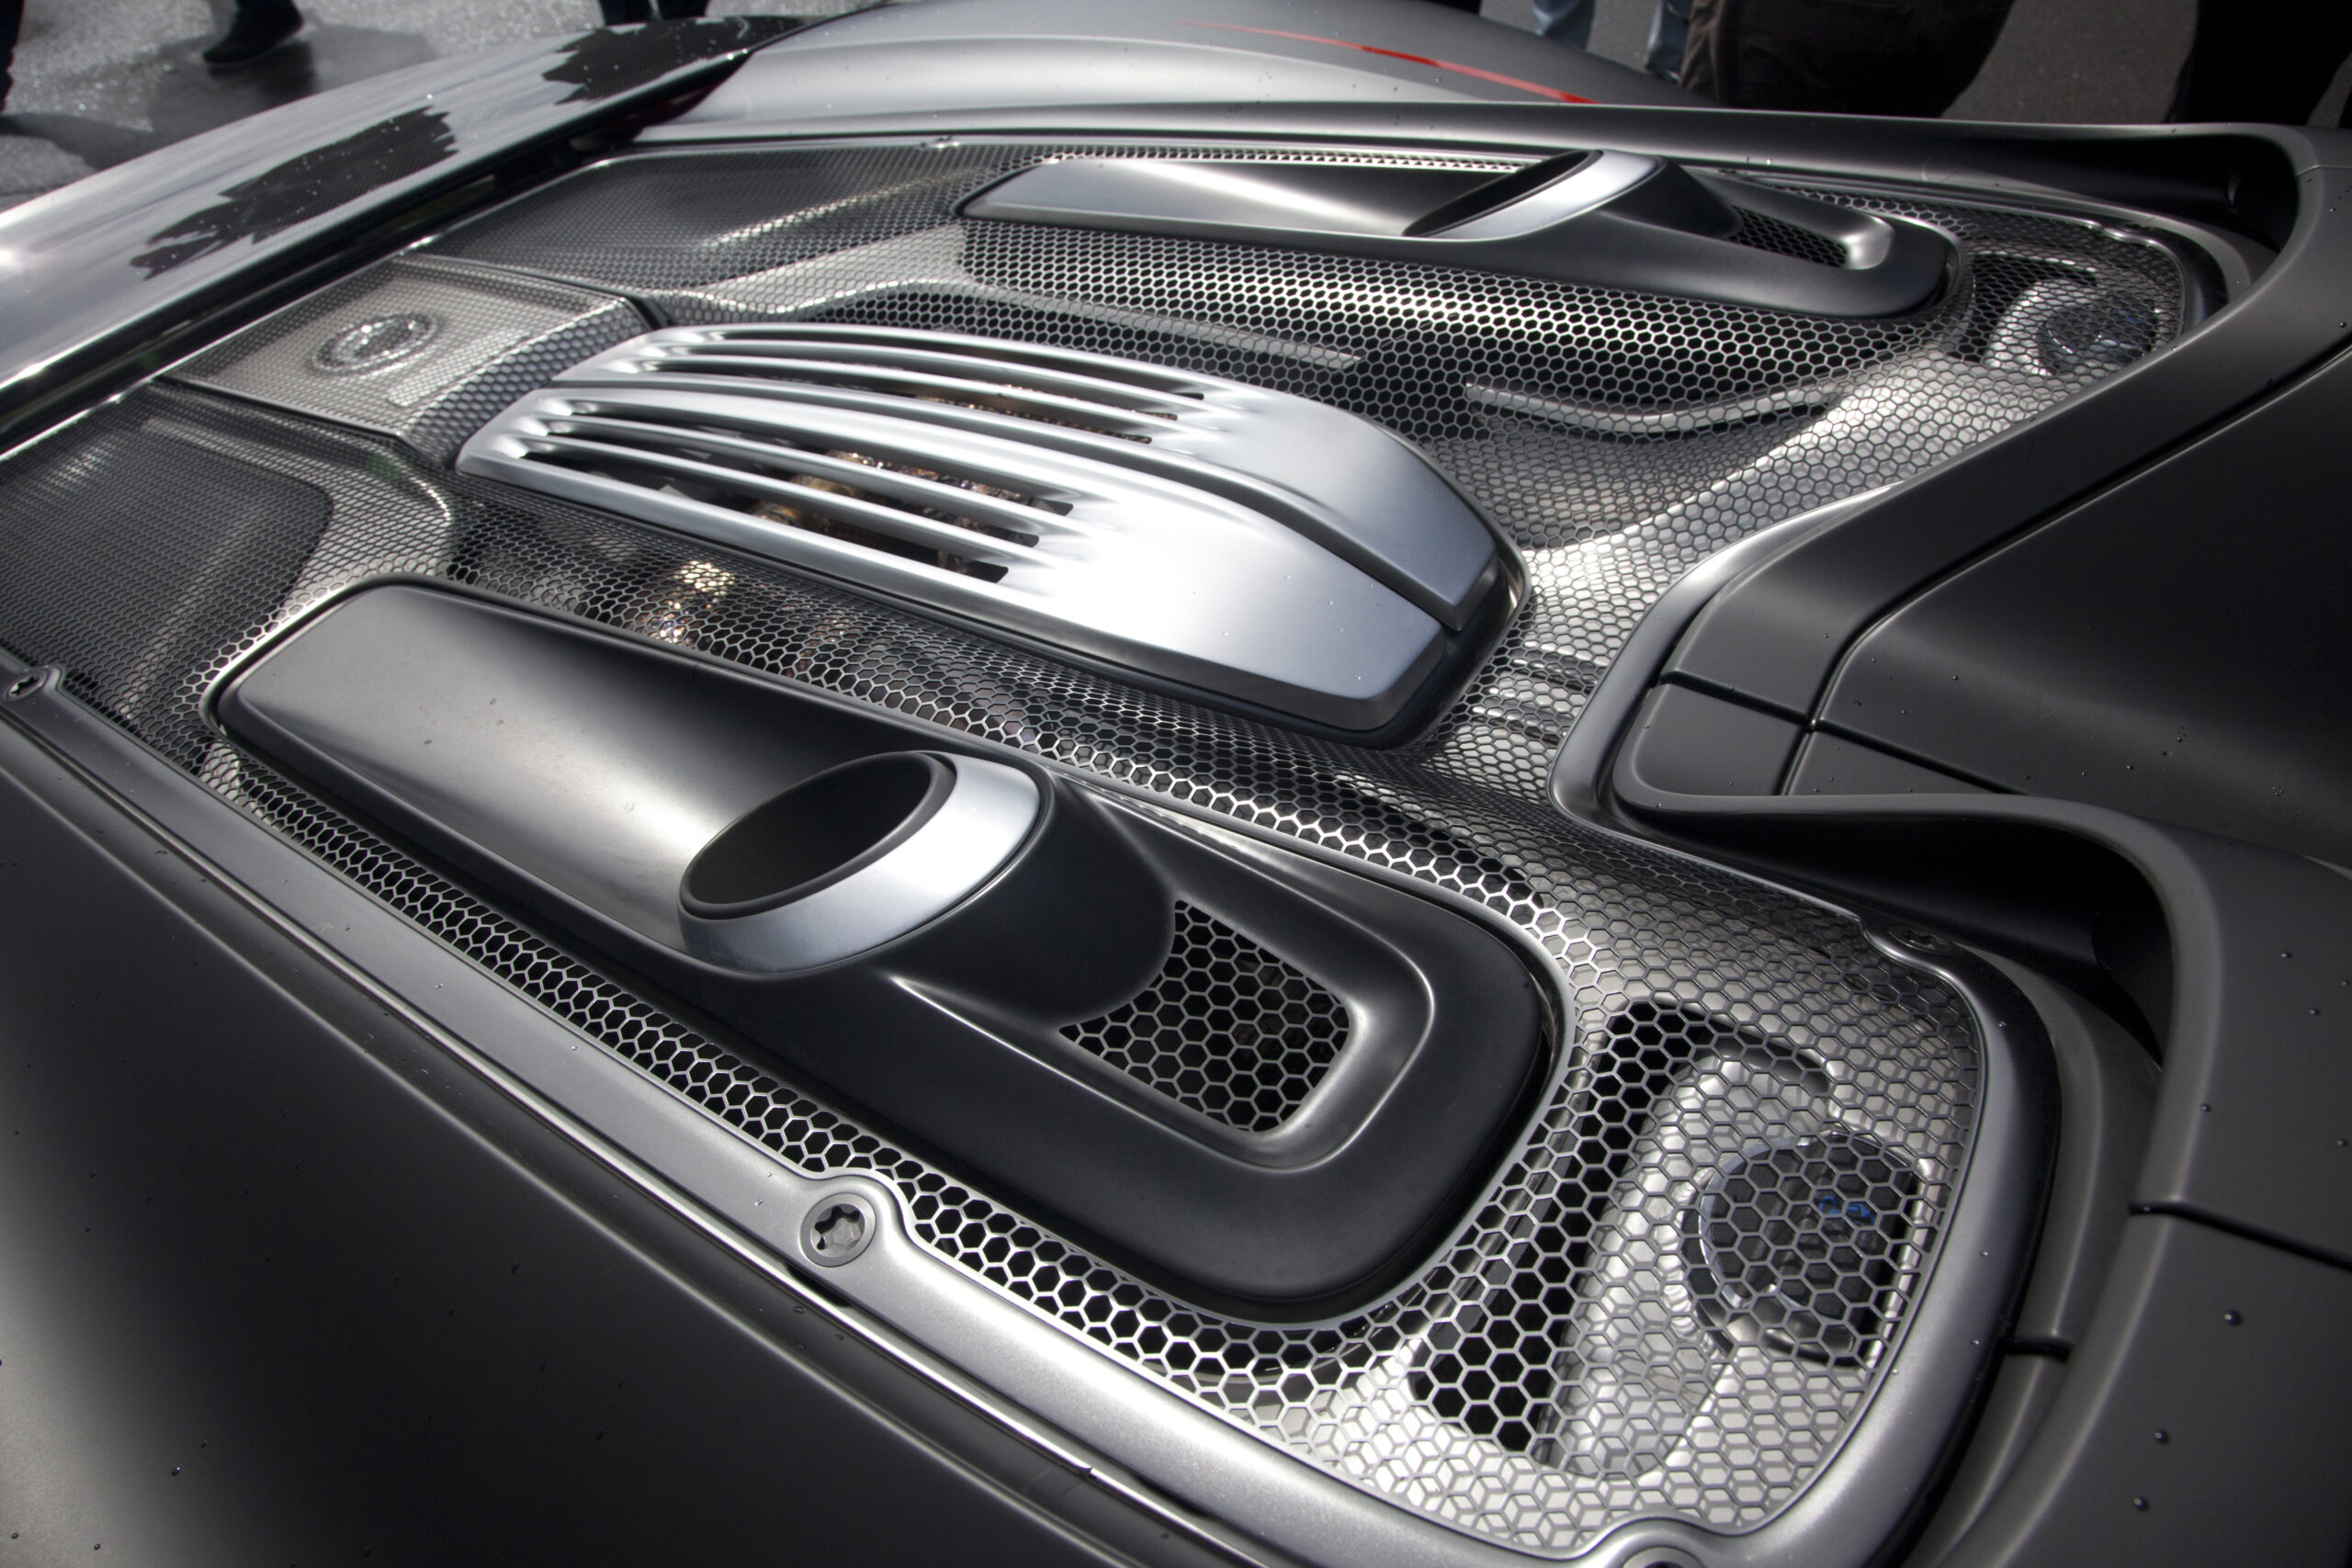 Porsche 918 Spyder engine and engine cover